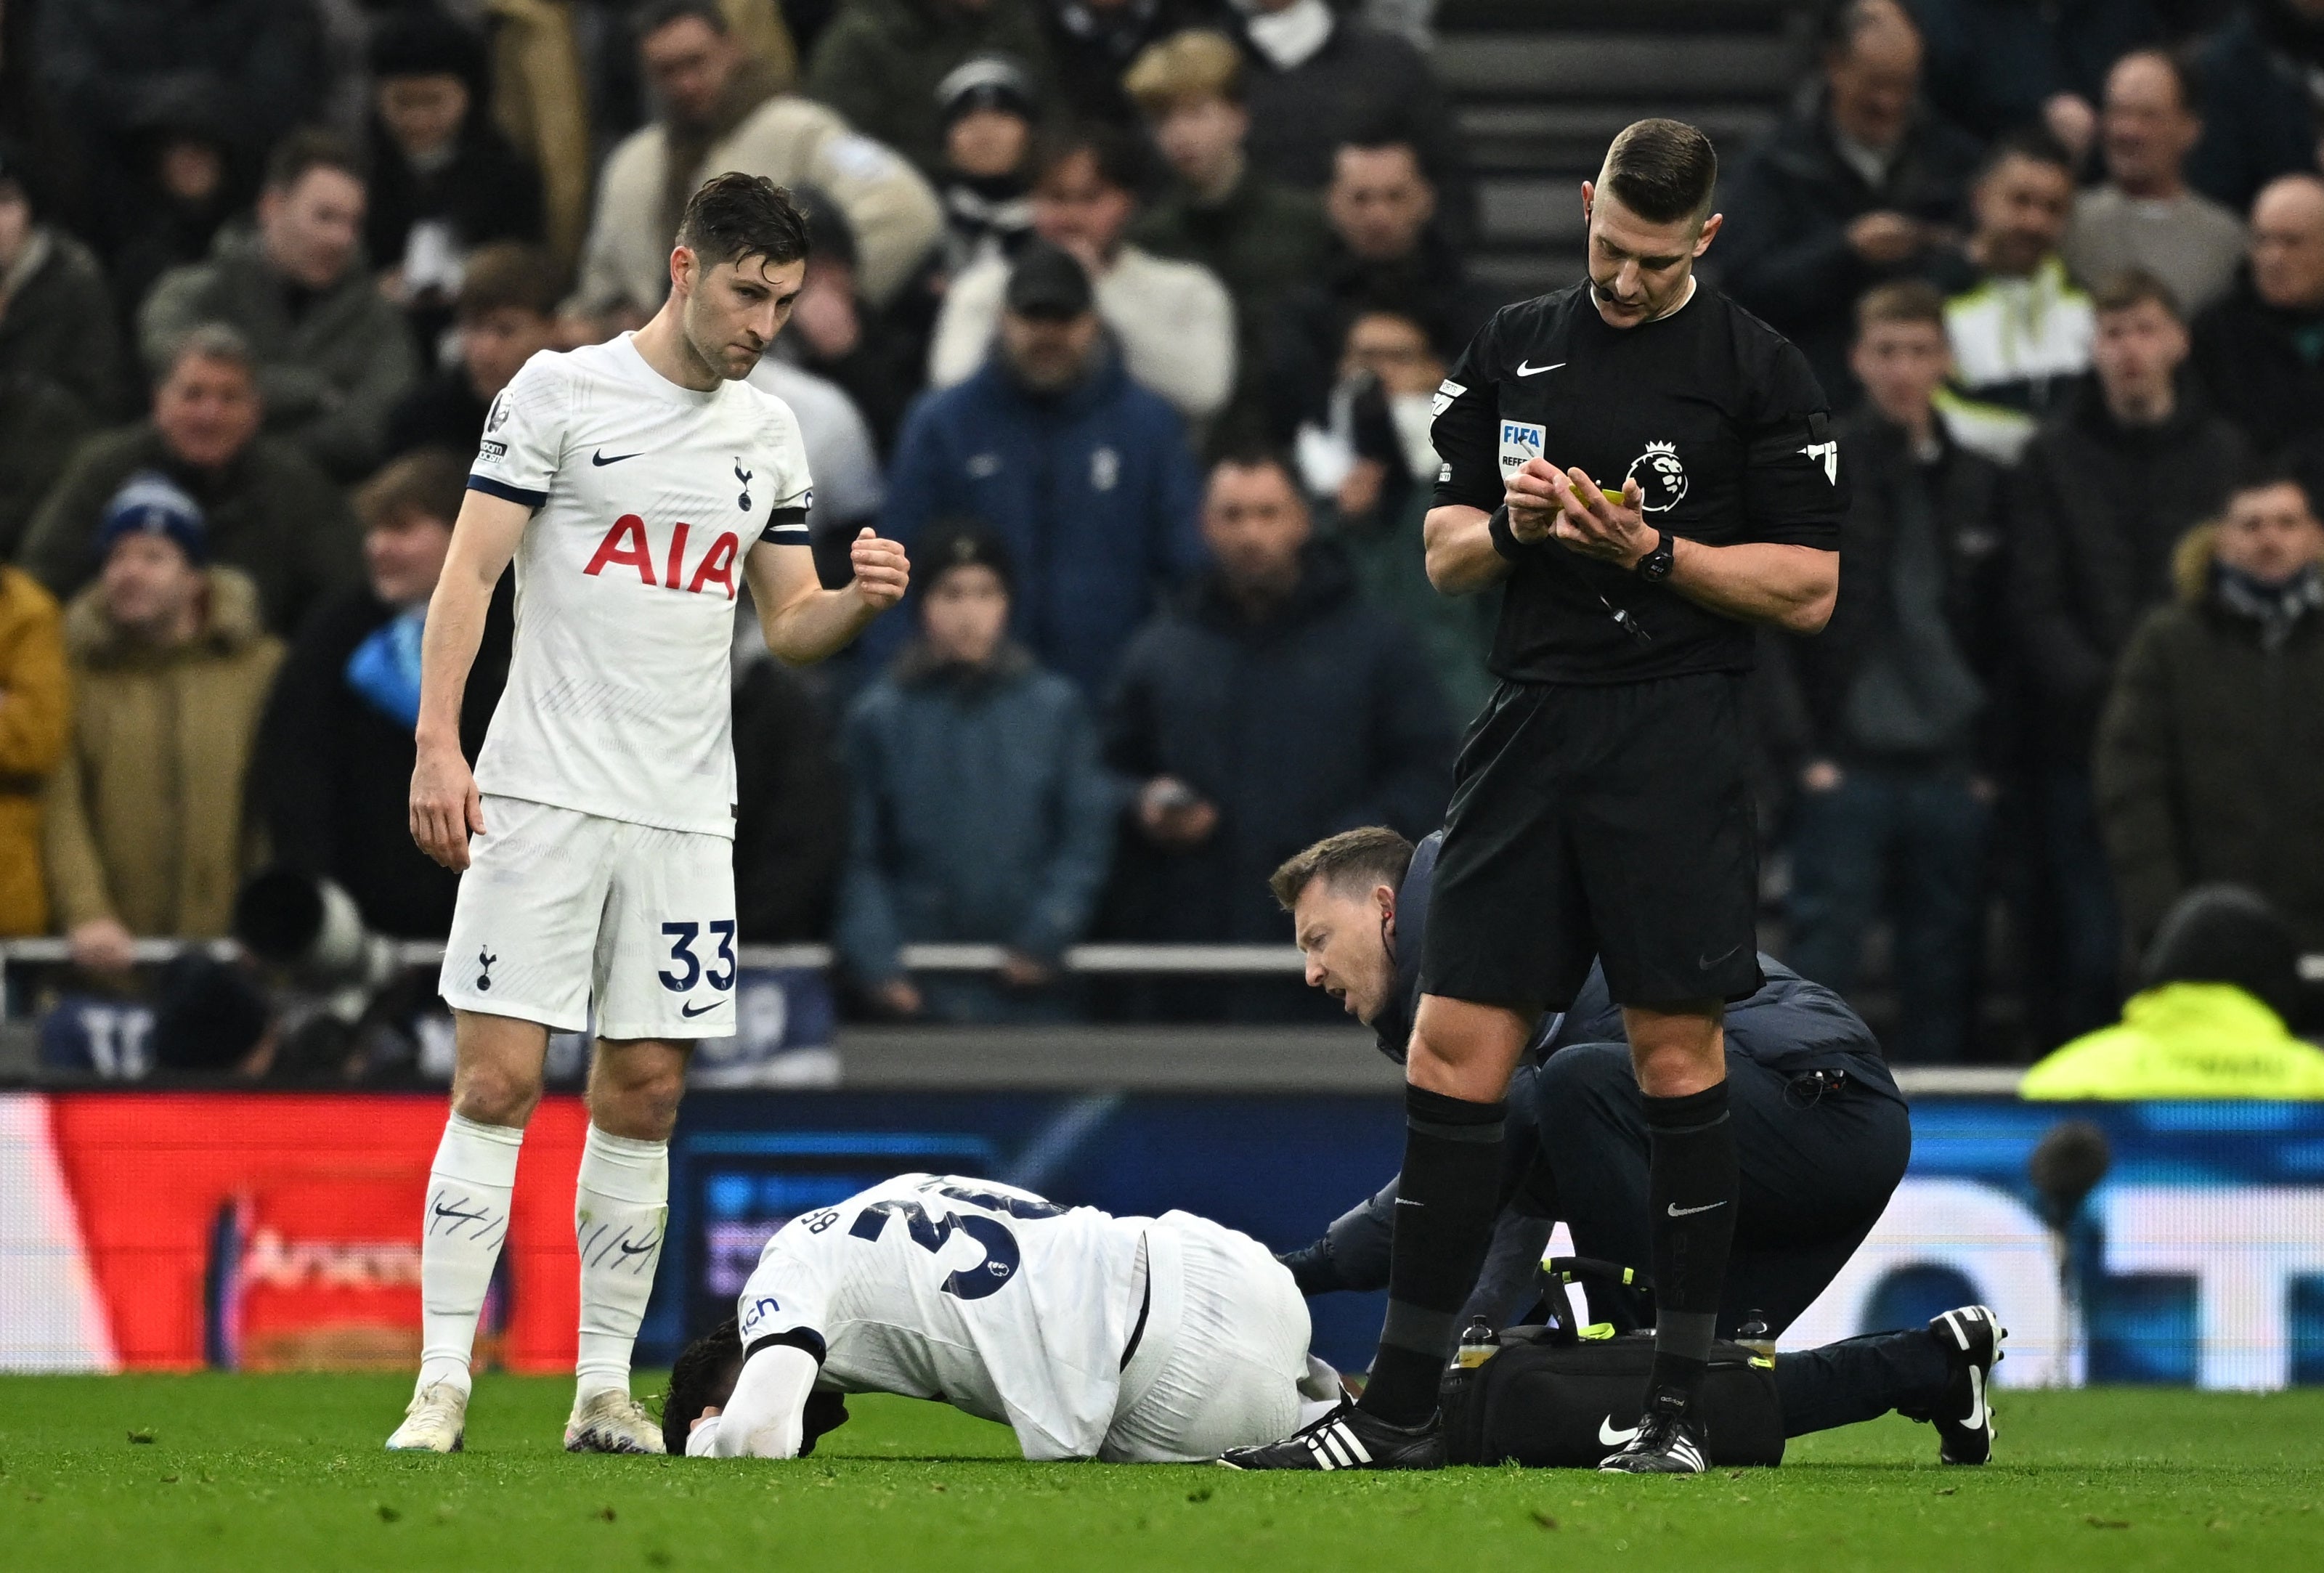 Tottenham already had an injury crisis before the latest setback